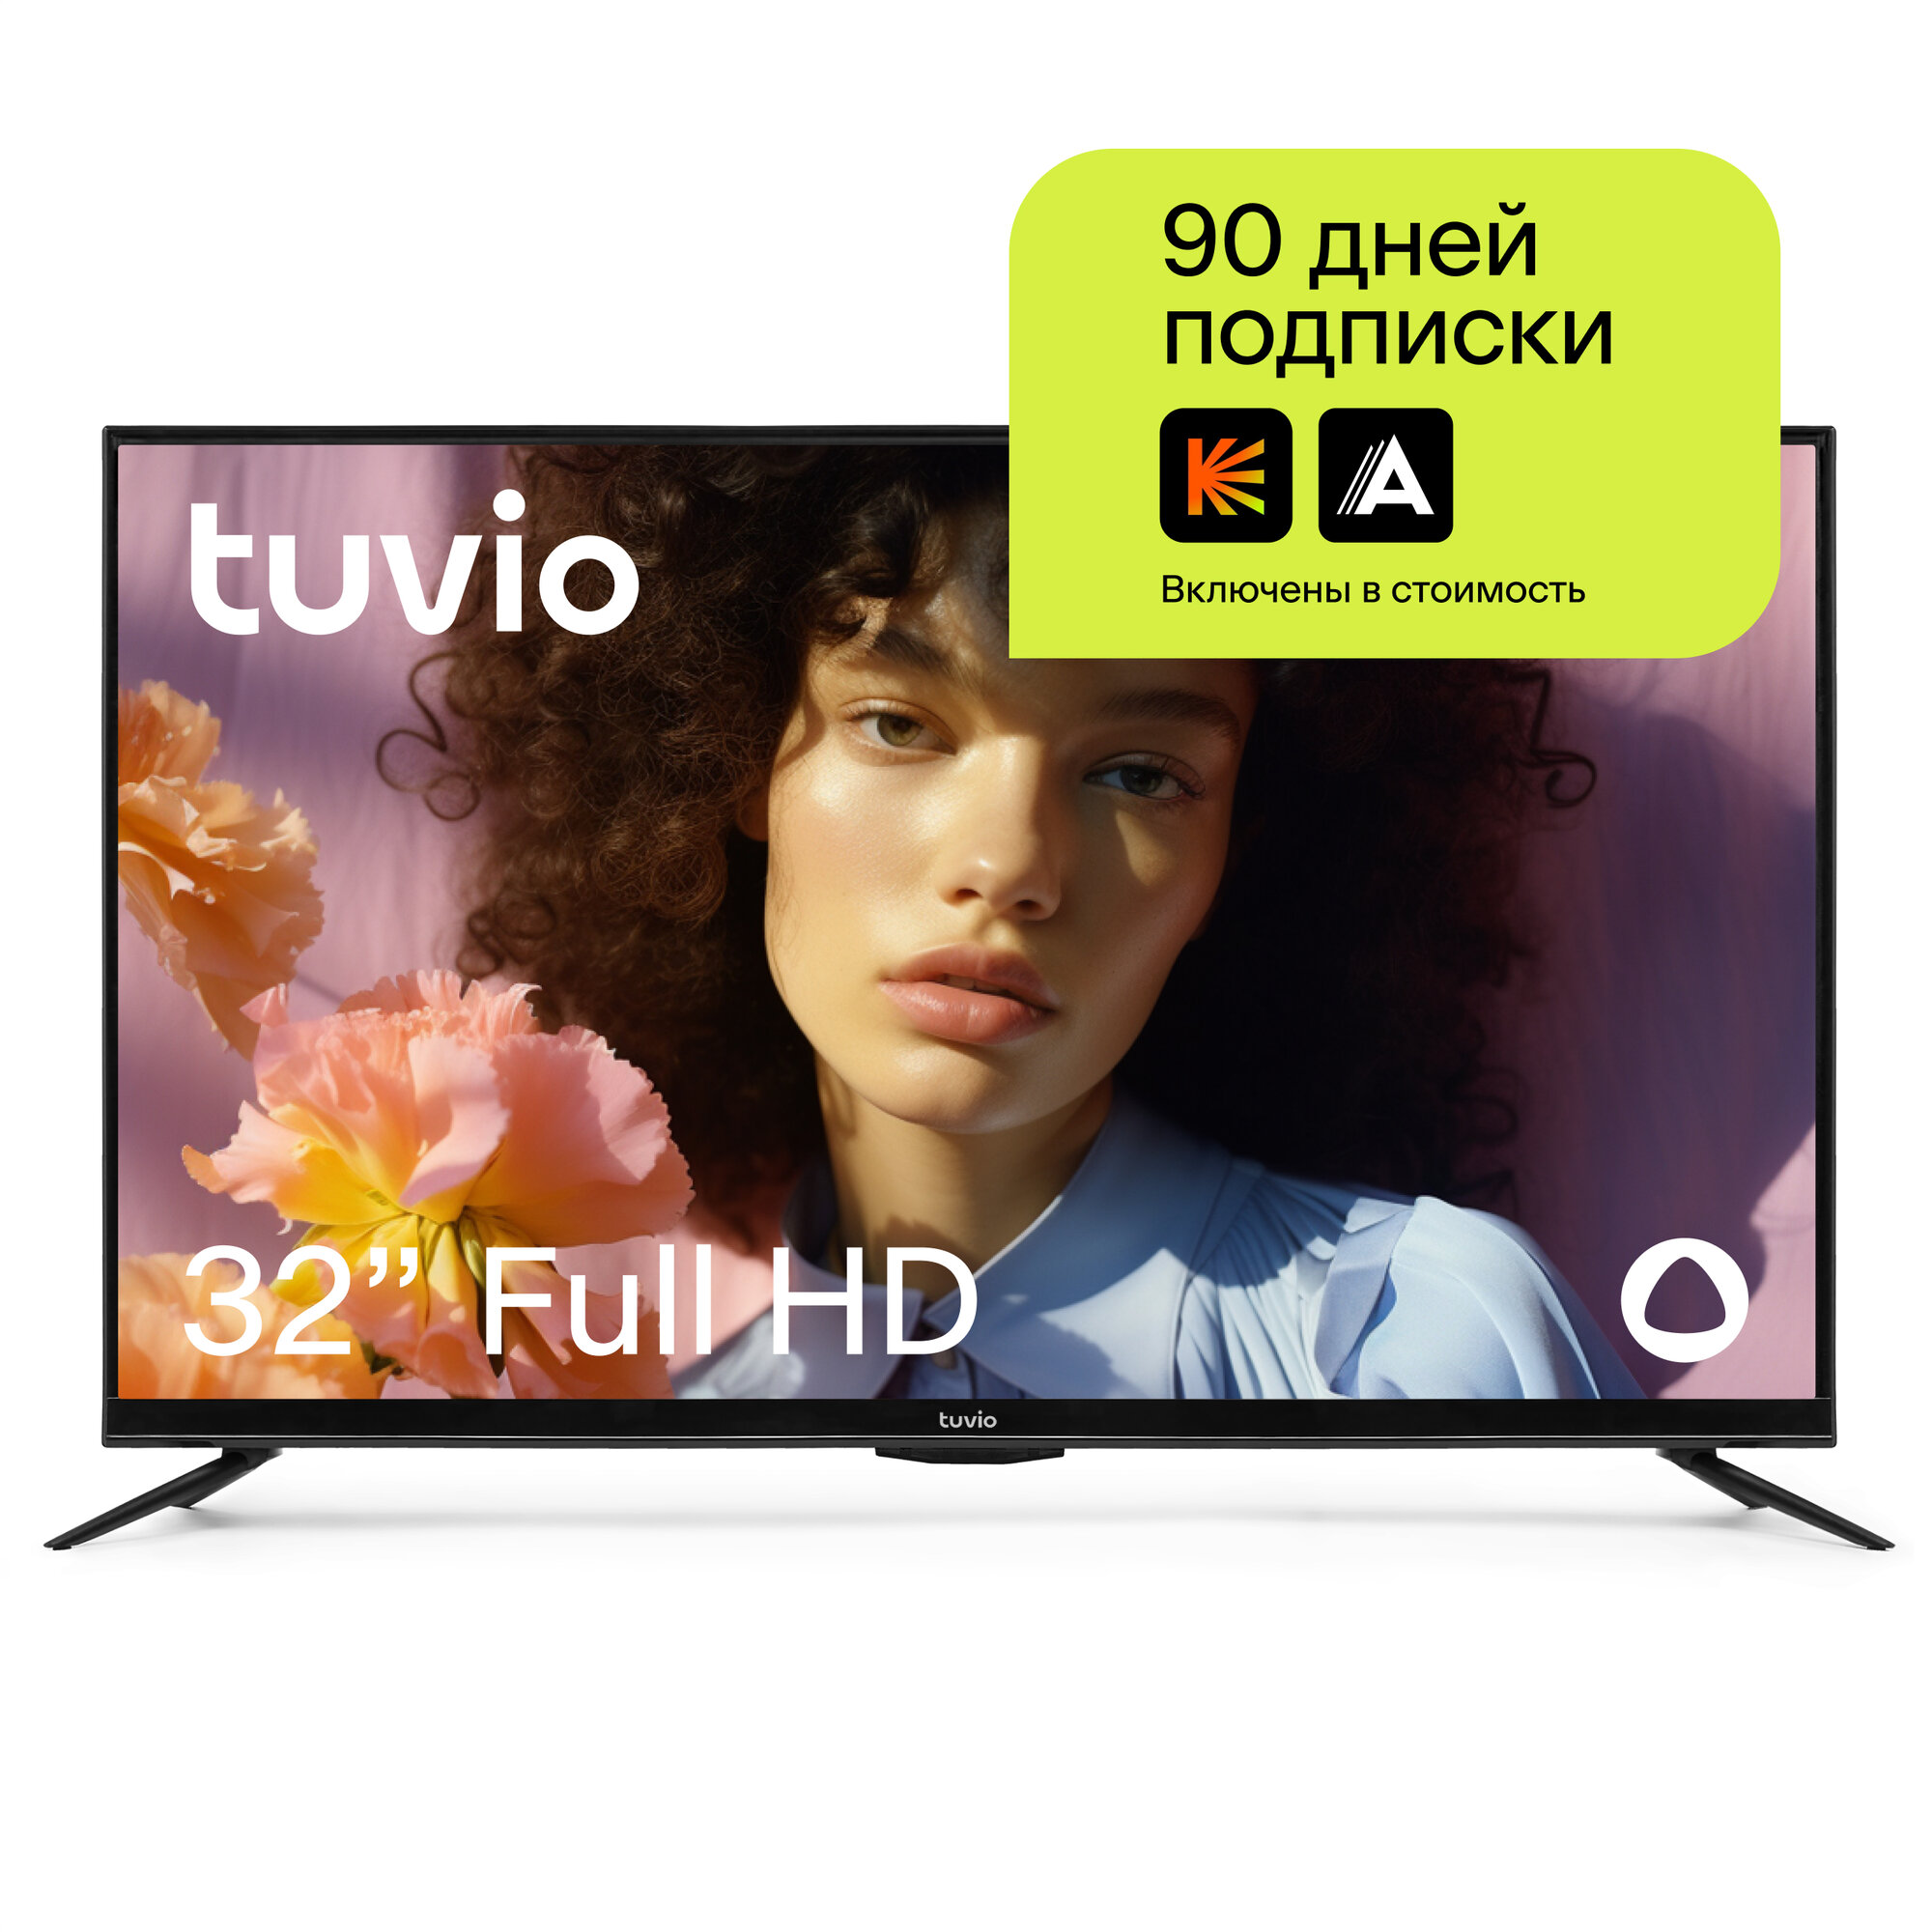 32” Телевизор Tuvio Full HD DLED на платформе Яндекс.ТВ STV-32FDFBK1R черный